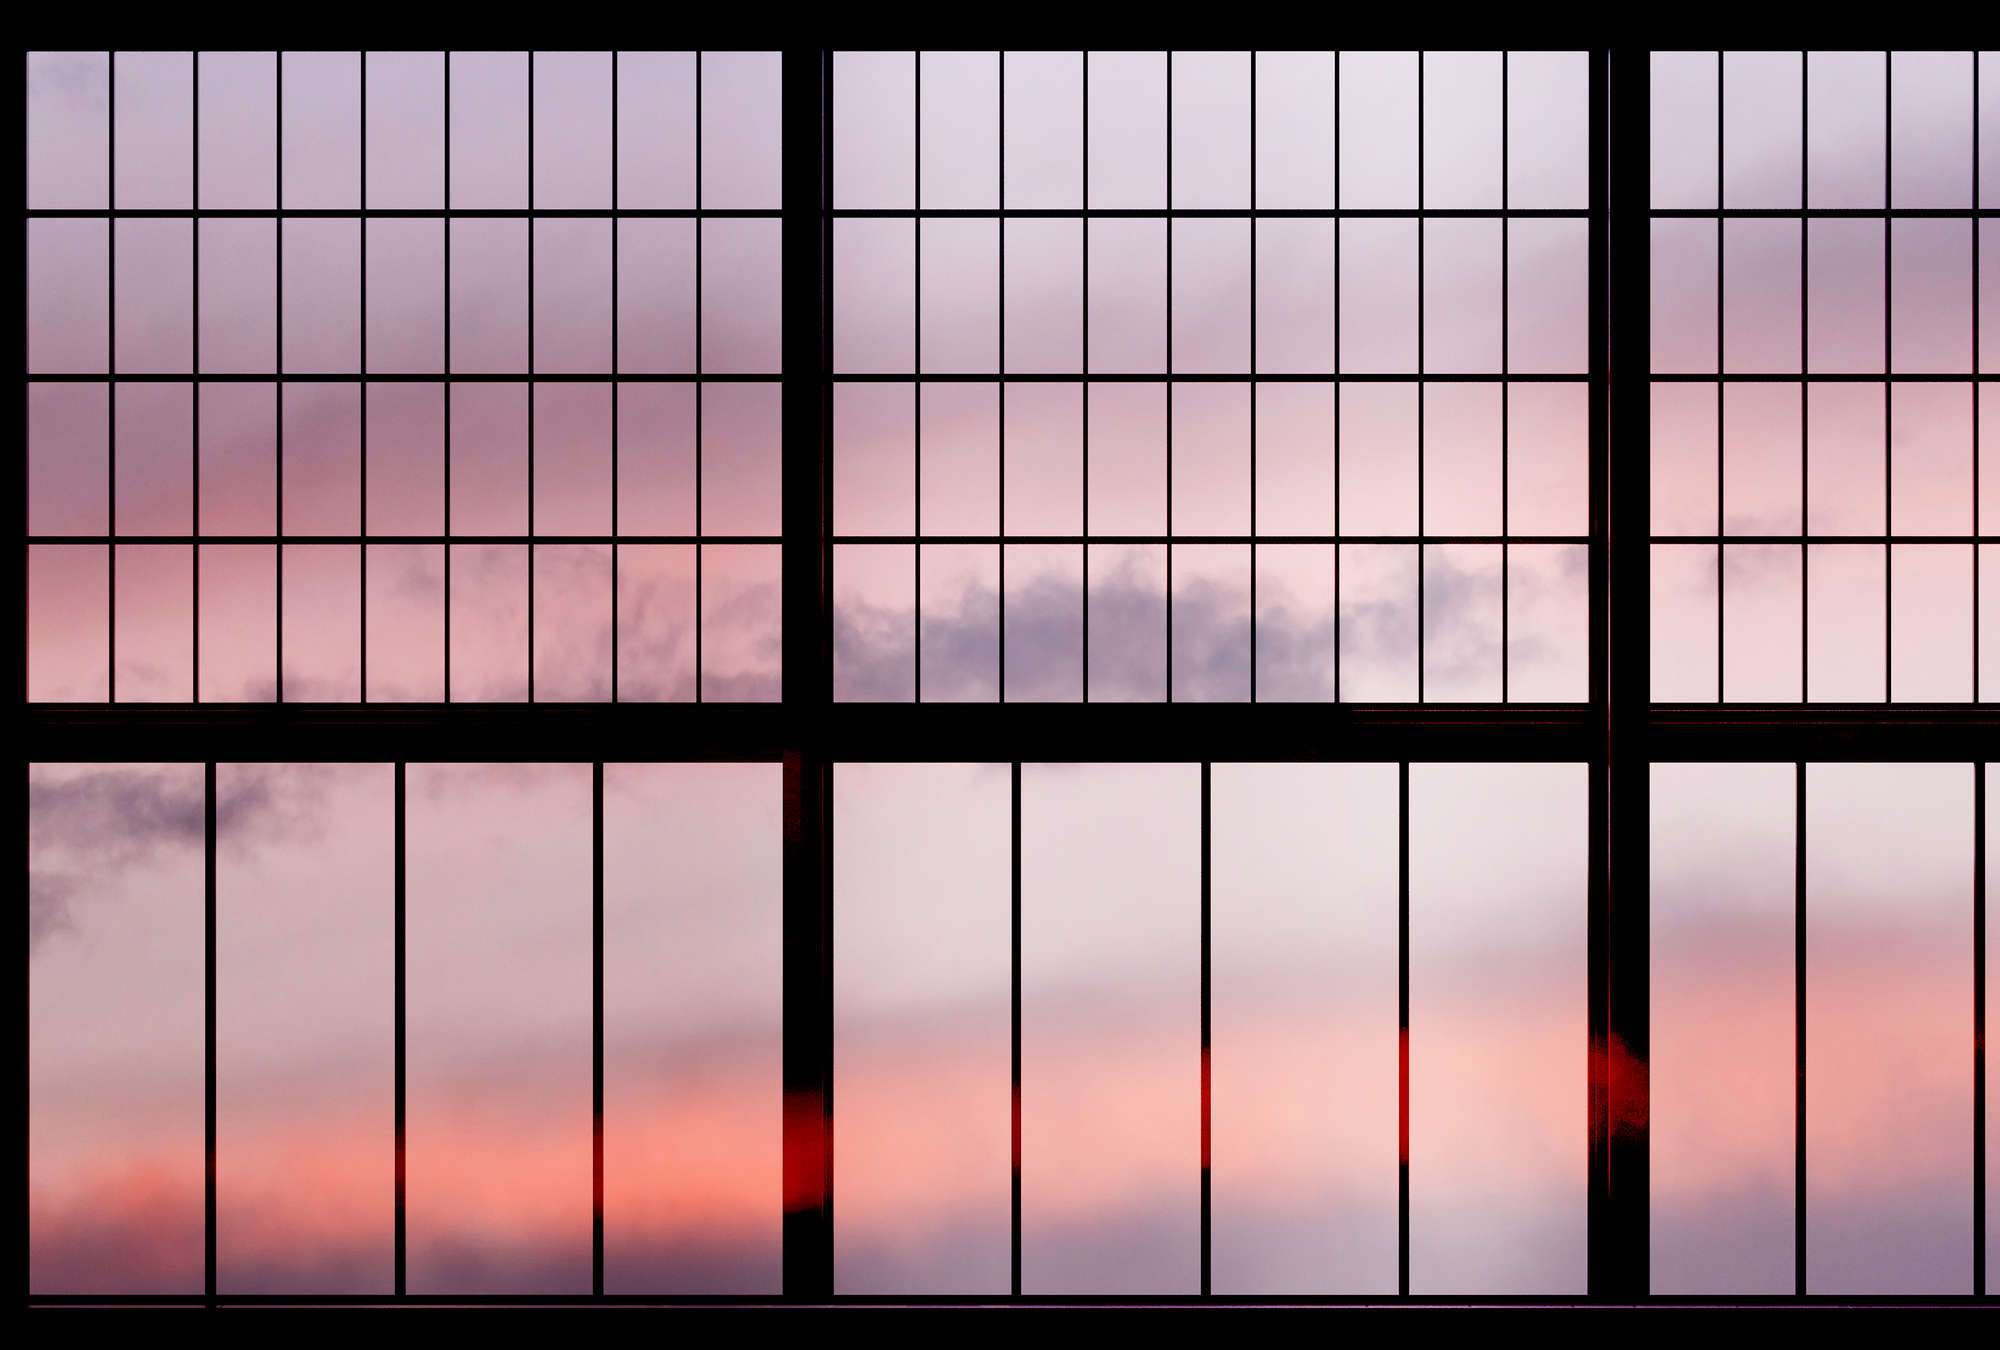             Sky 1 - Fototapete Fenster Ausblick Sonnenaufgang – Rosa, Schwarz | Perlmutt Glattvlies
        